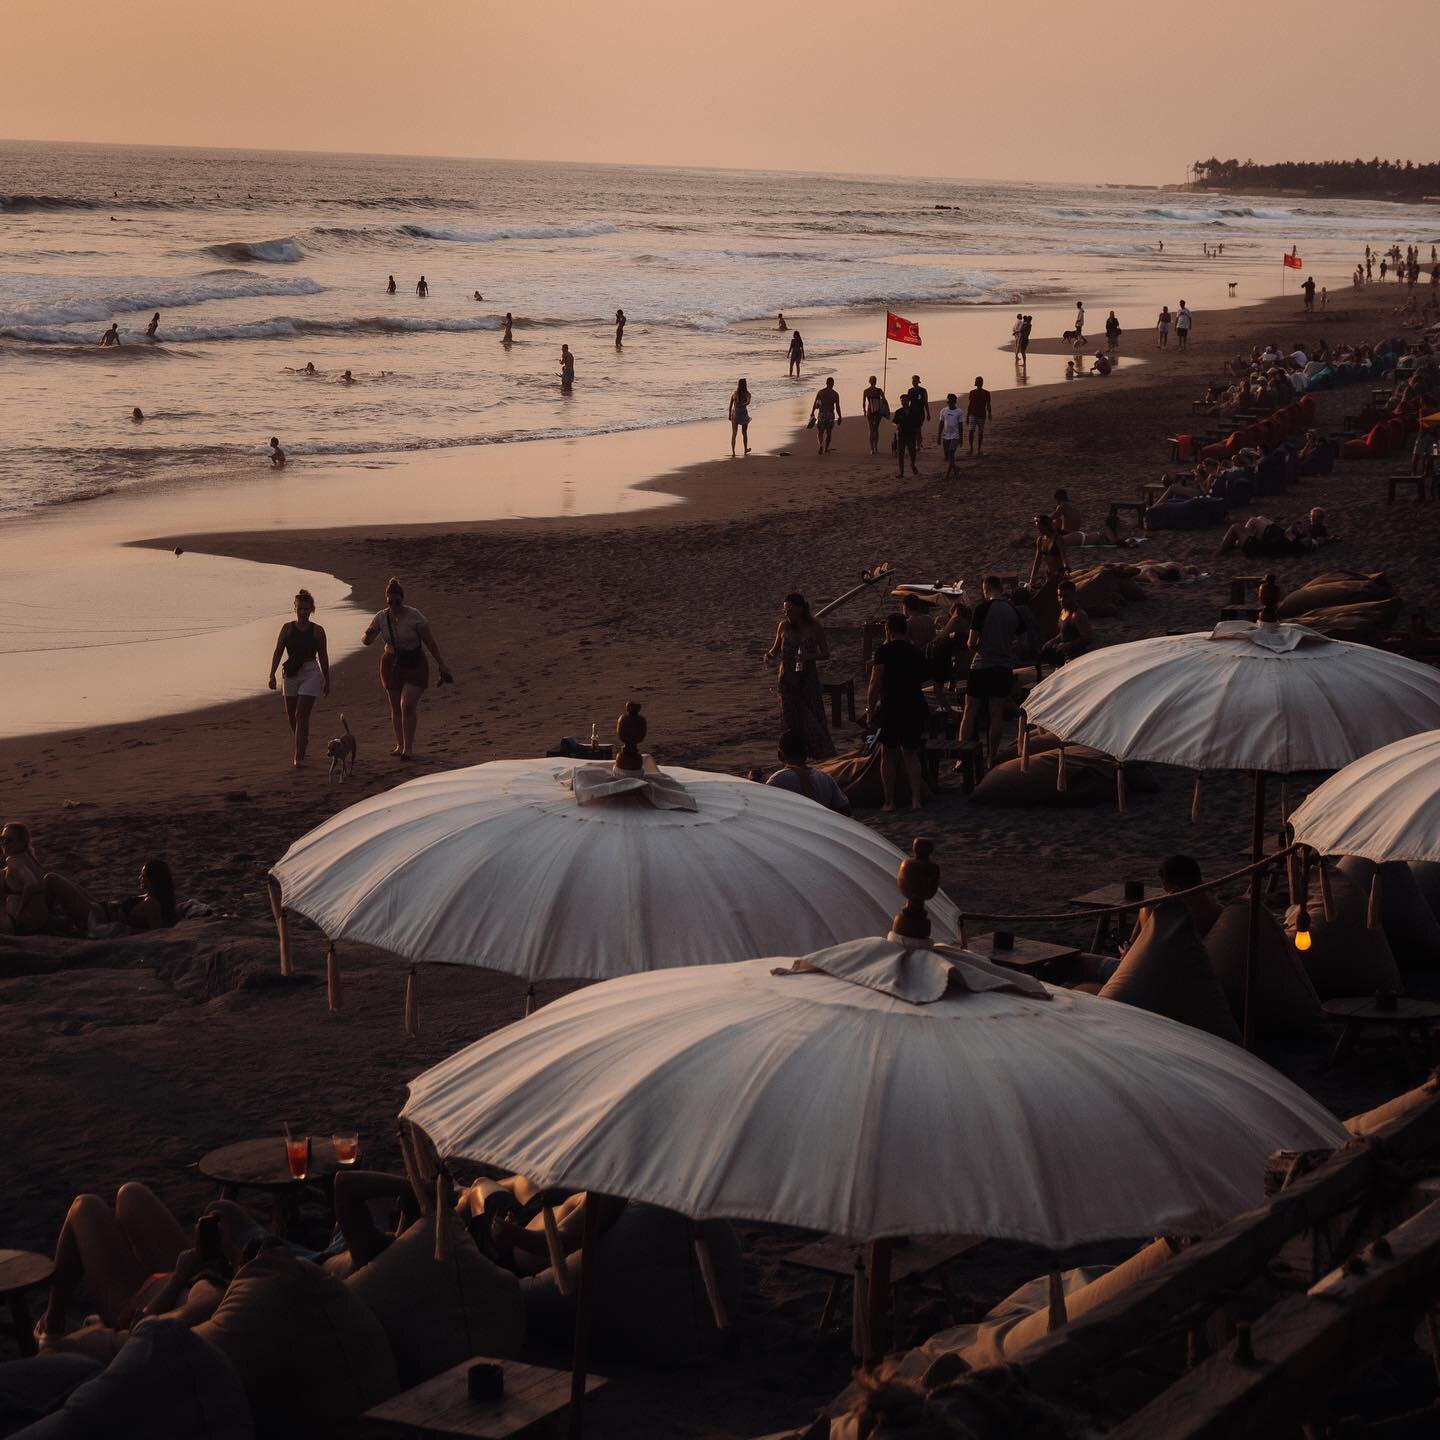 60-second Travel Guide: Canggu

Read more at Bohemianbela.com

#Canggu #Bali #TravelBlogger #Surfing #Nightlife #BeachVibes #LuxurySpas #BoutiqueShopping #Brunch #Lunch #Dinner #GourmetRestaurants #UpscaleBars #OldMans #TheLawn #LaBrisa #Deus #Luigis